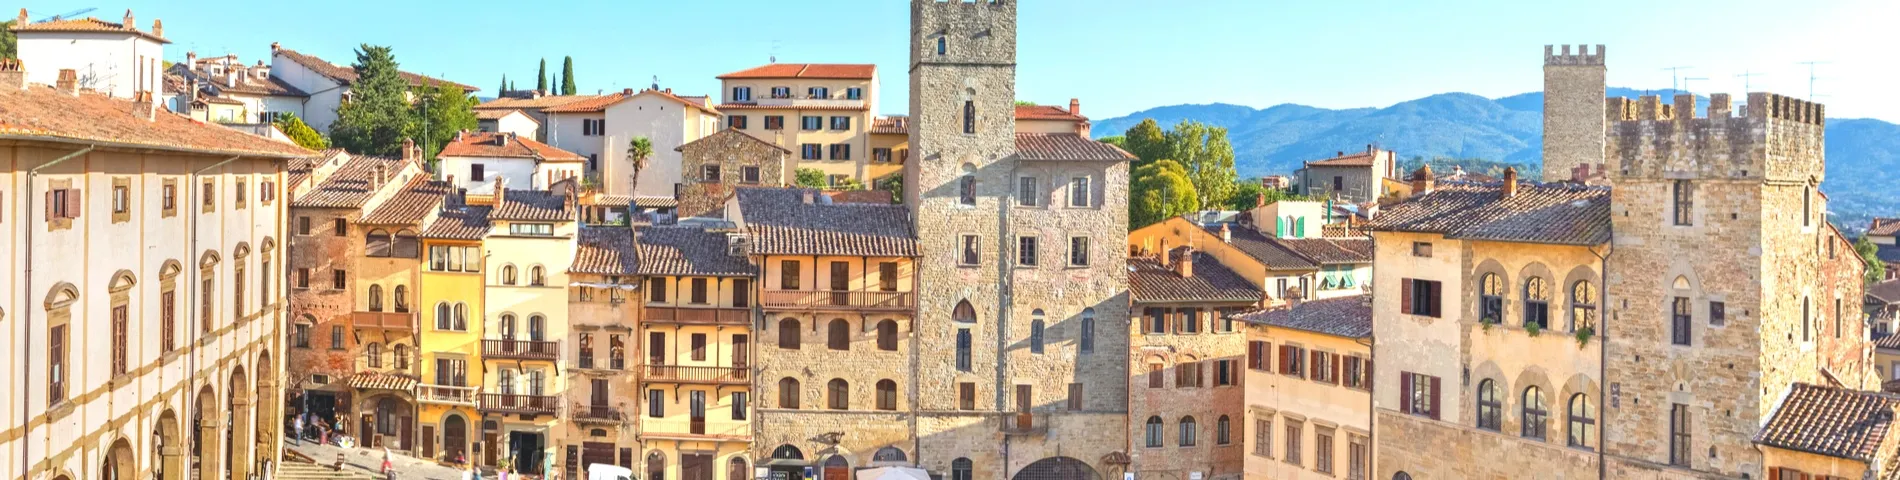 Arezzo - Curs estàndard